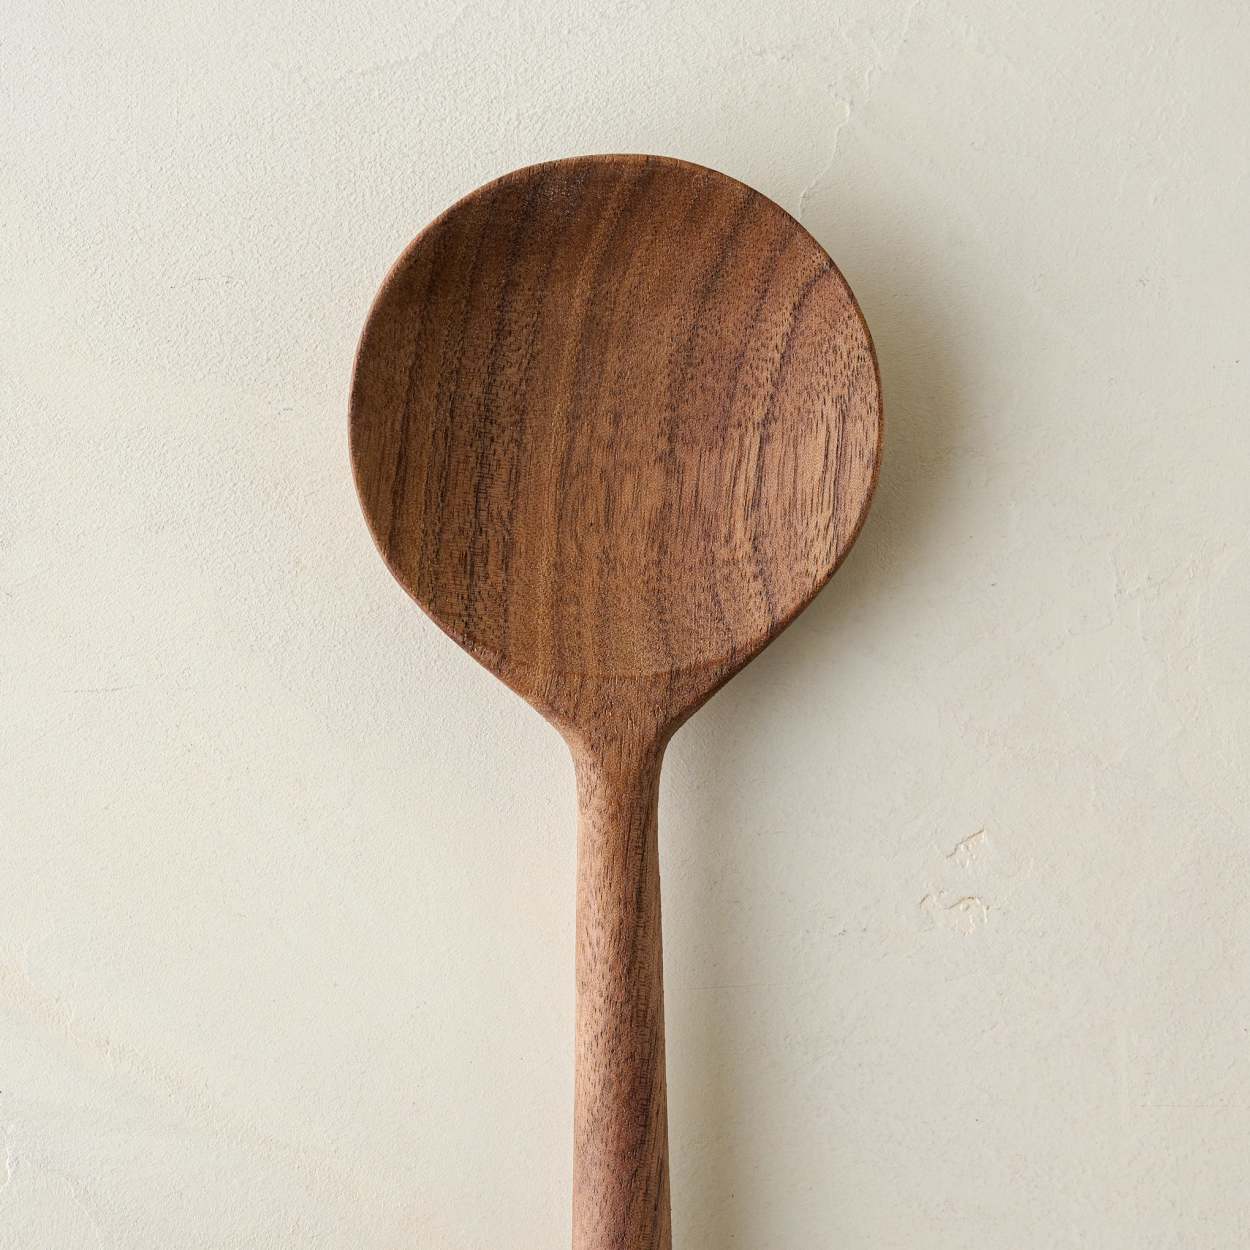 Reclaimed Coffee Wood Measuring Spoons, Sustainable